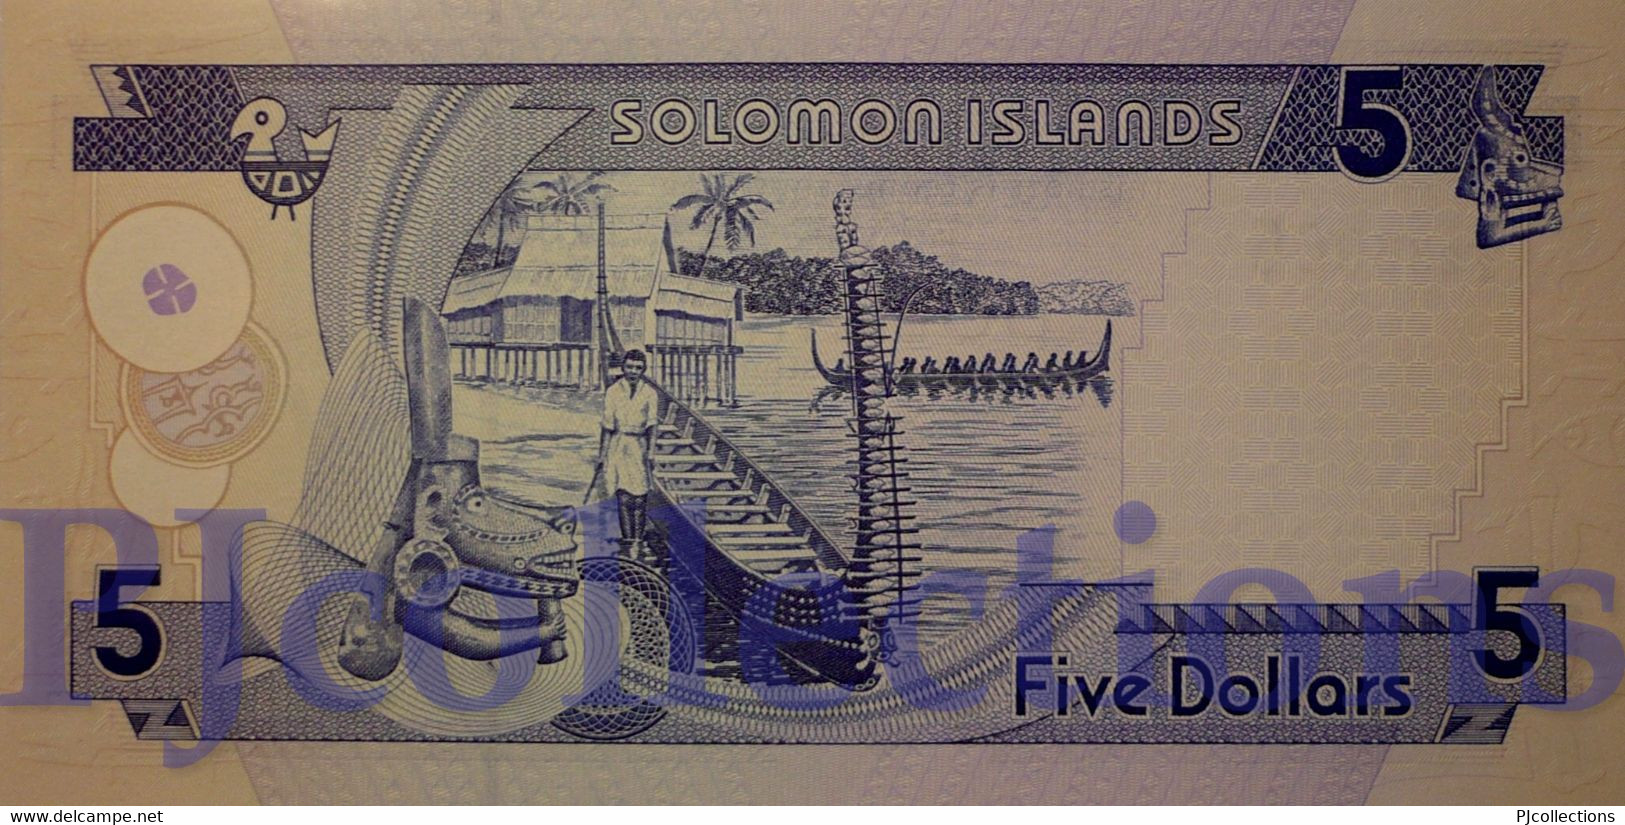 SOLOMON ISLANDS 5 DOLLARS 1997 PICK 19 UNC - Solomon Islands